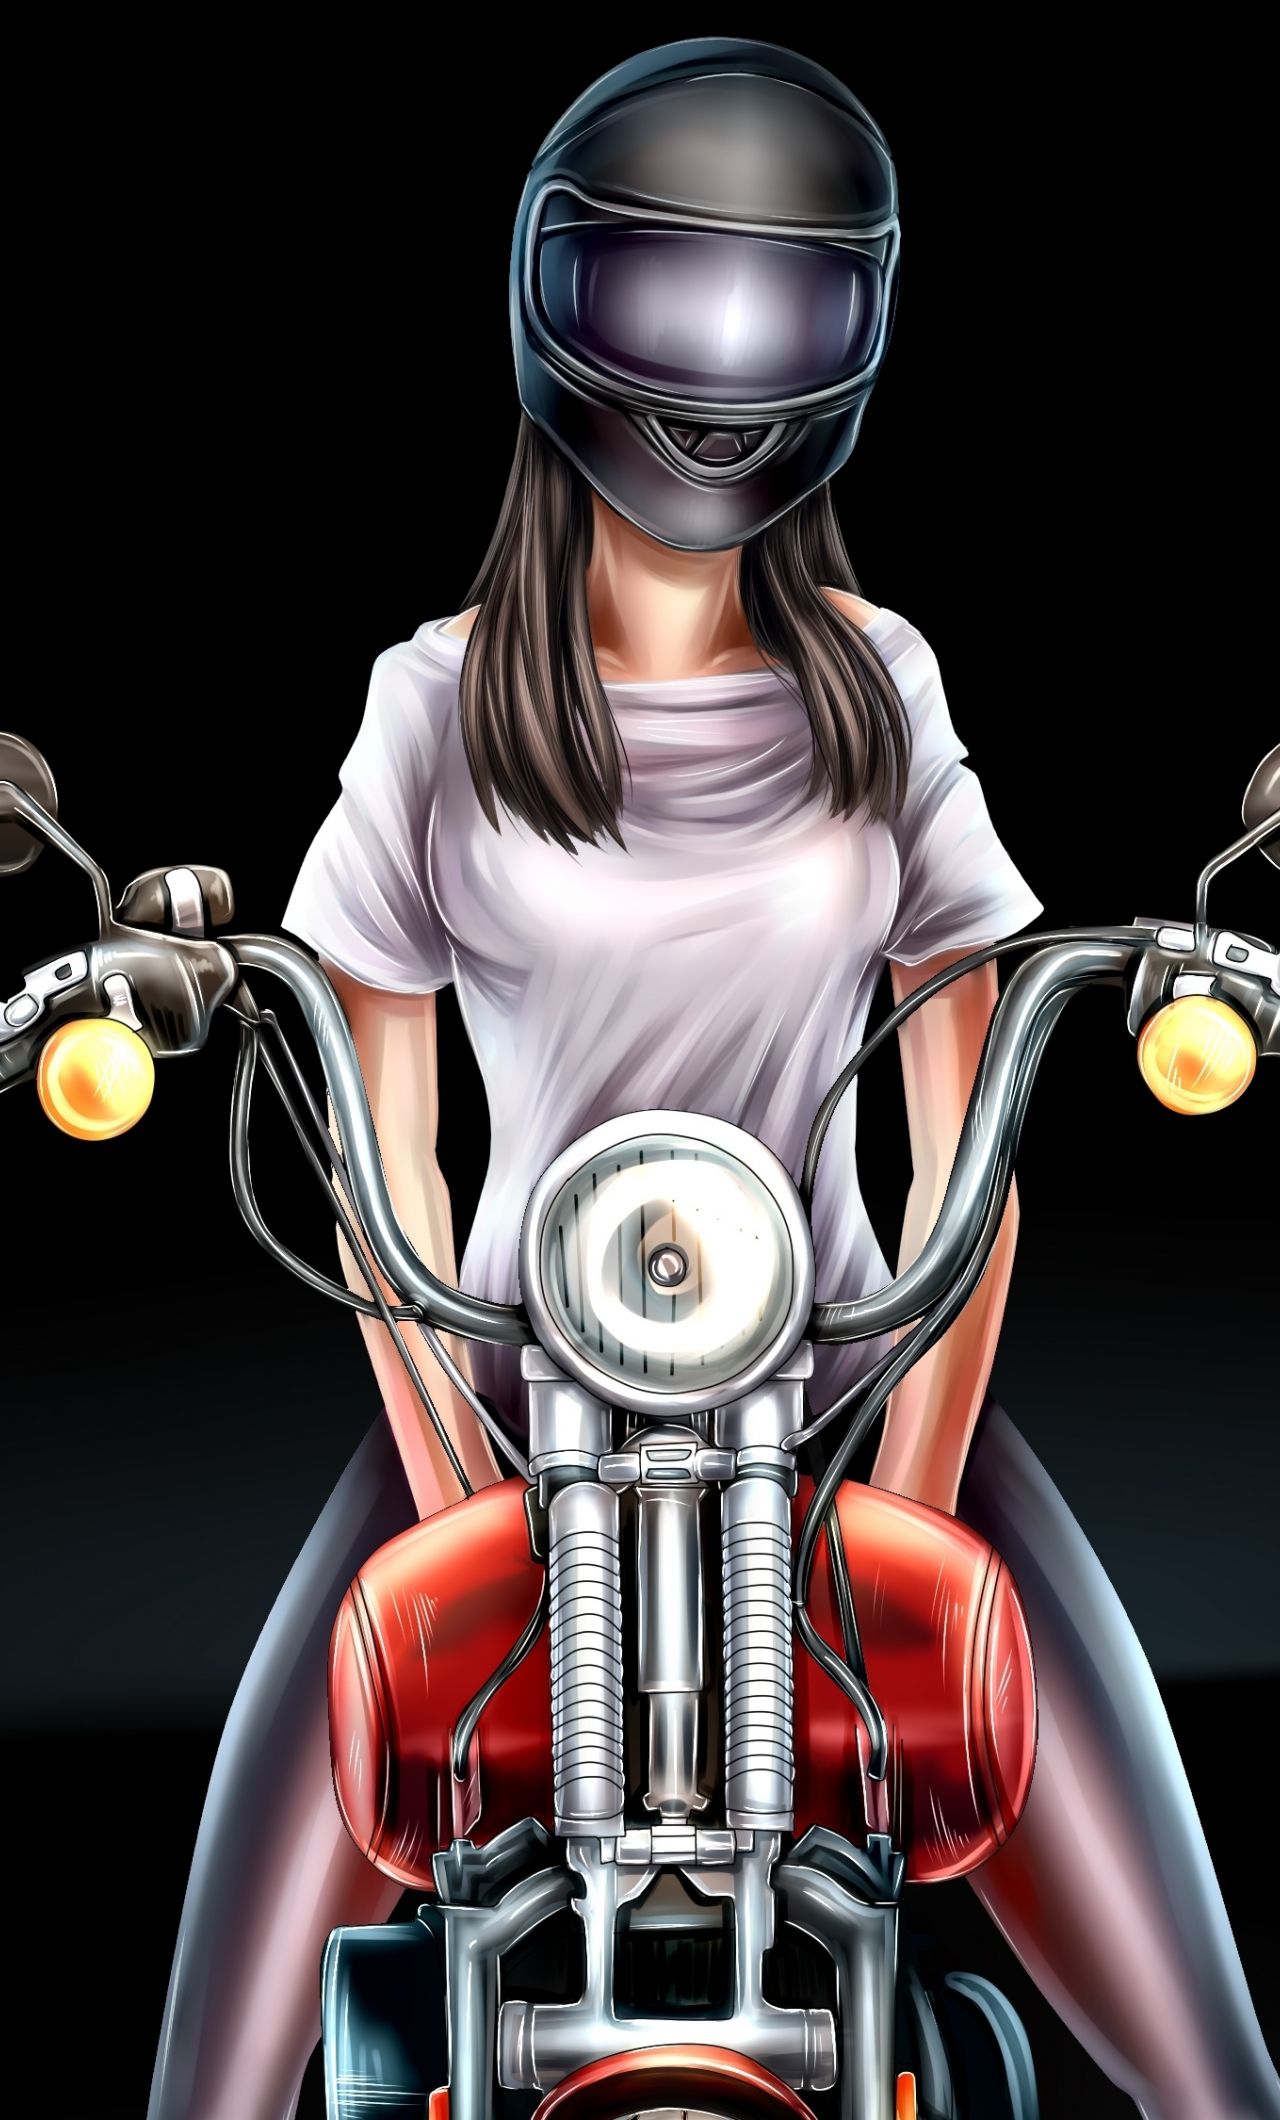 Download 1280x2120 wallpaper biker girl, digital art, iphone 6 plus, 1280x2120 HD image, background, 24077